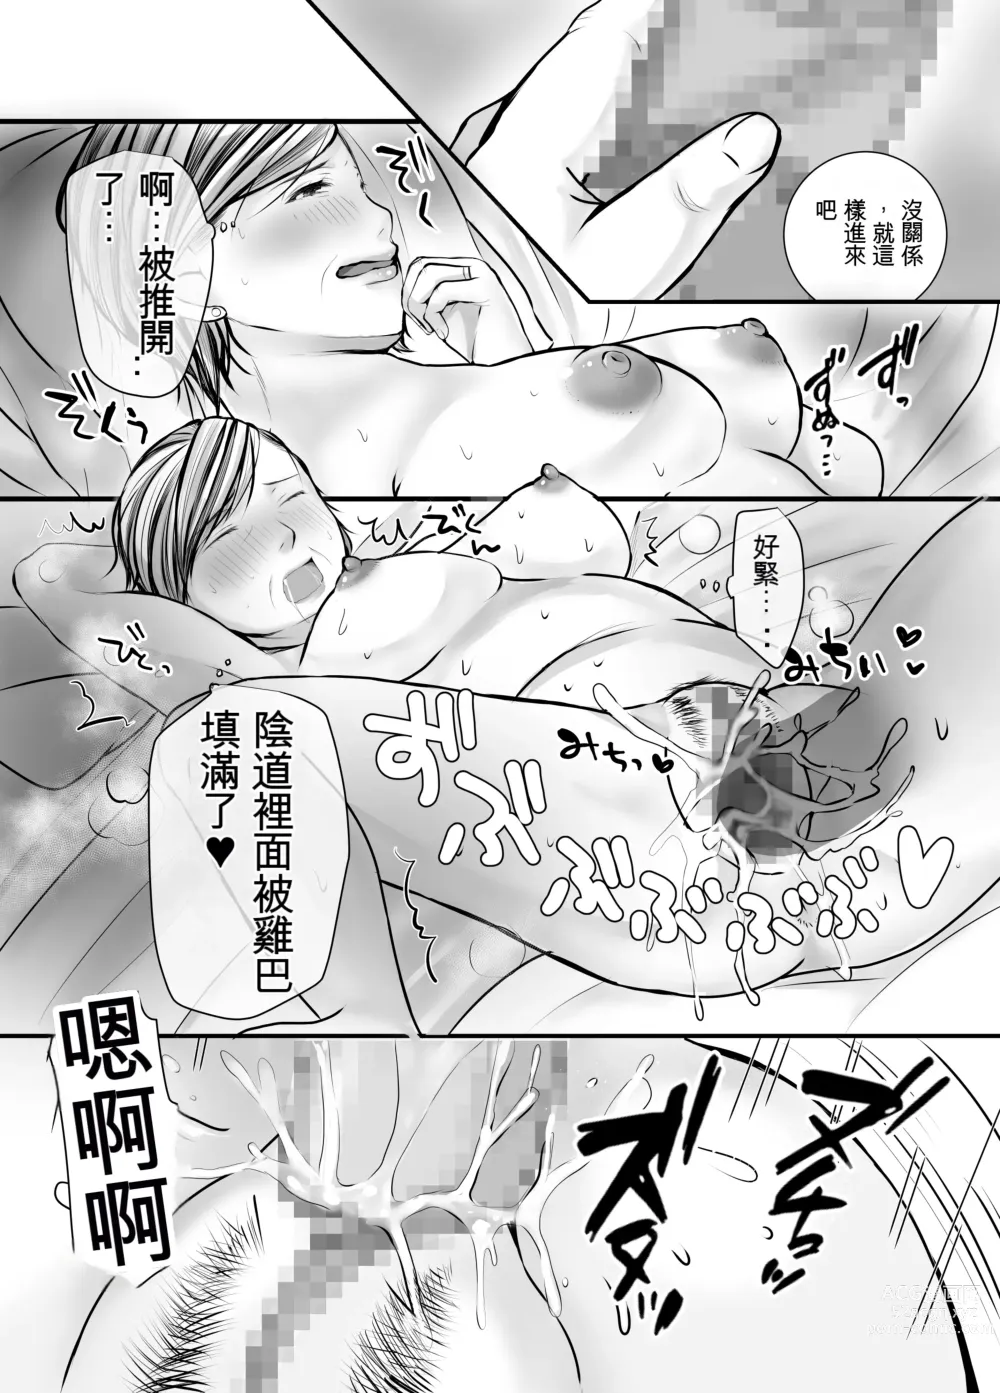 Page 46 of manga 祖母與孫子 ~孫子的第一次被內射的那一天~